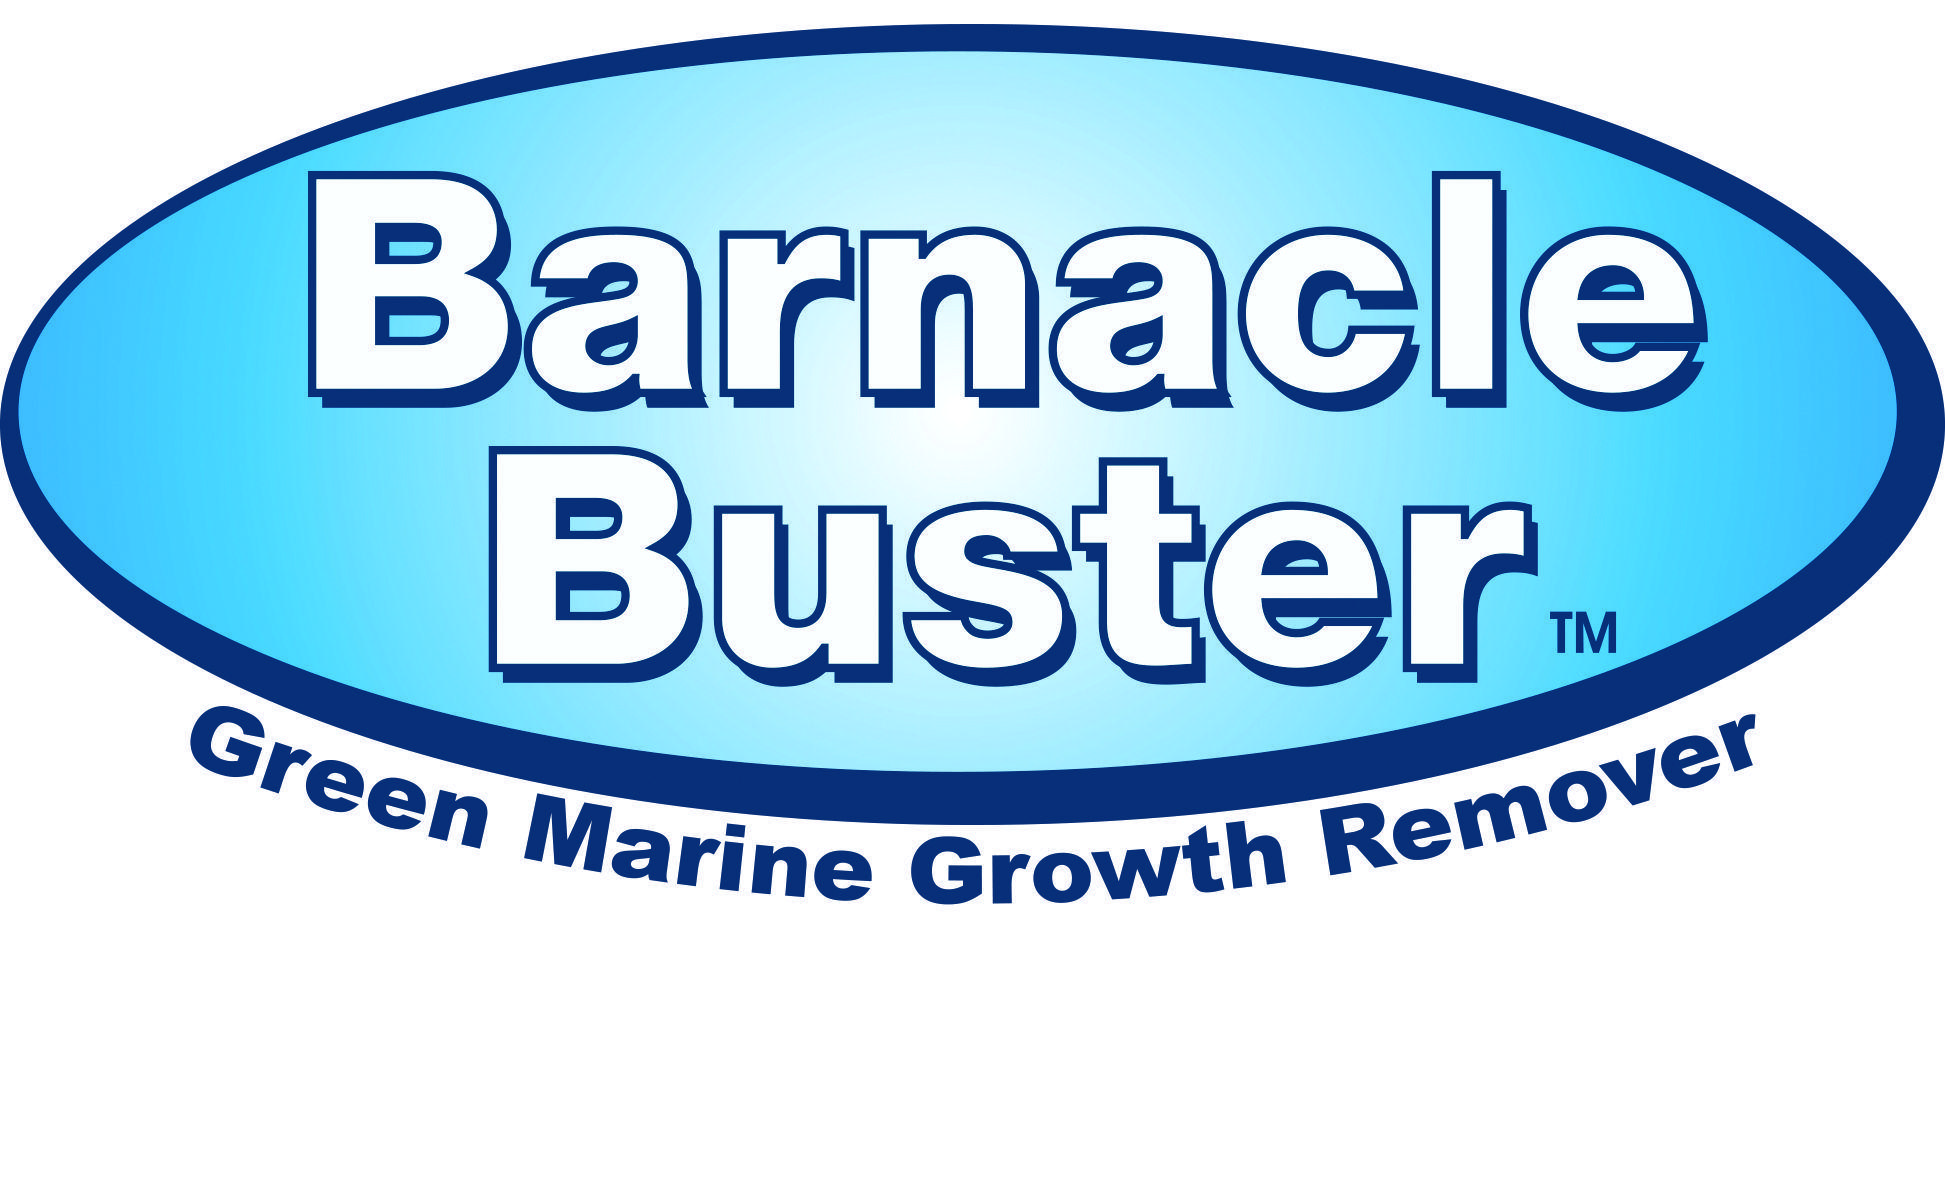 Barnacle Logo - Gelair and Barnacle Buster